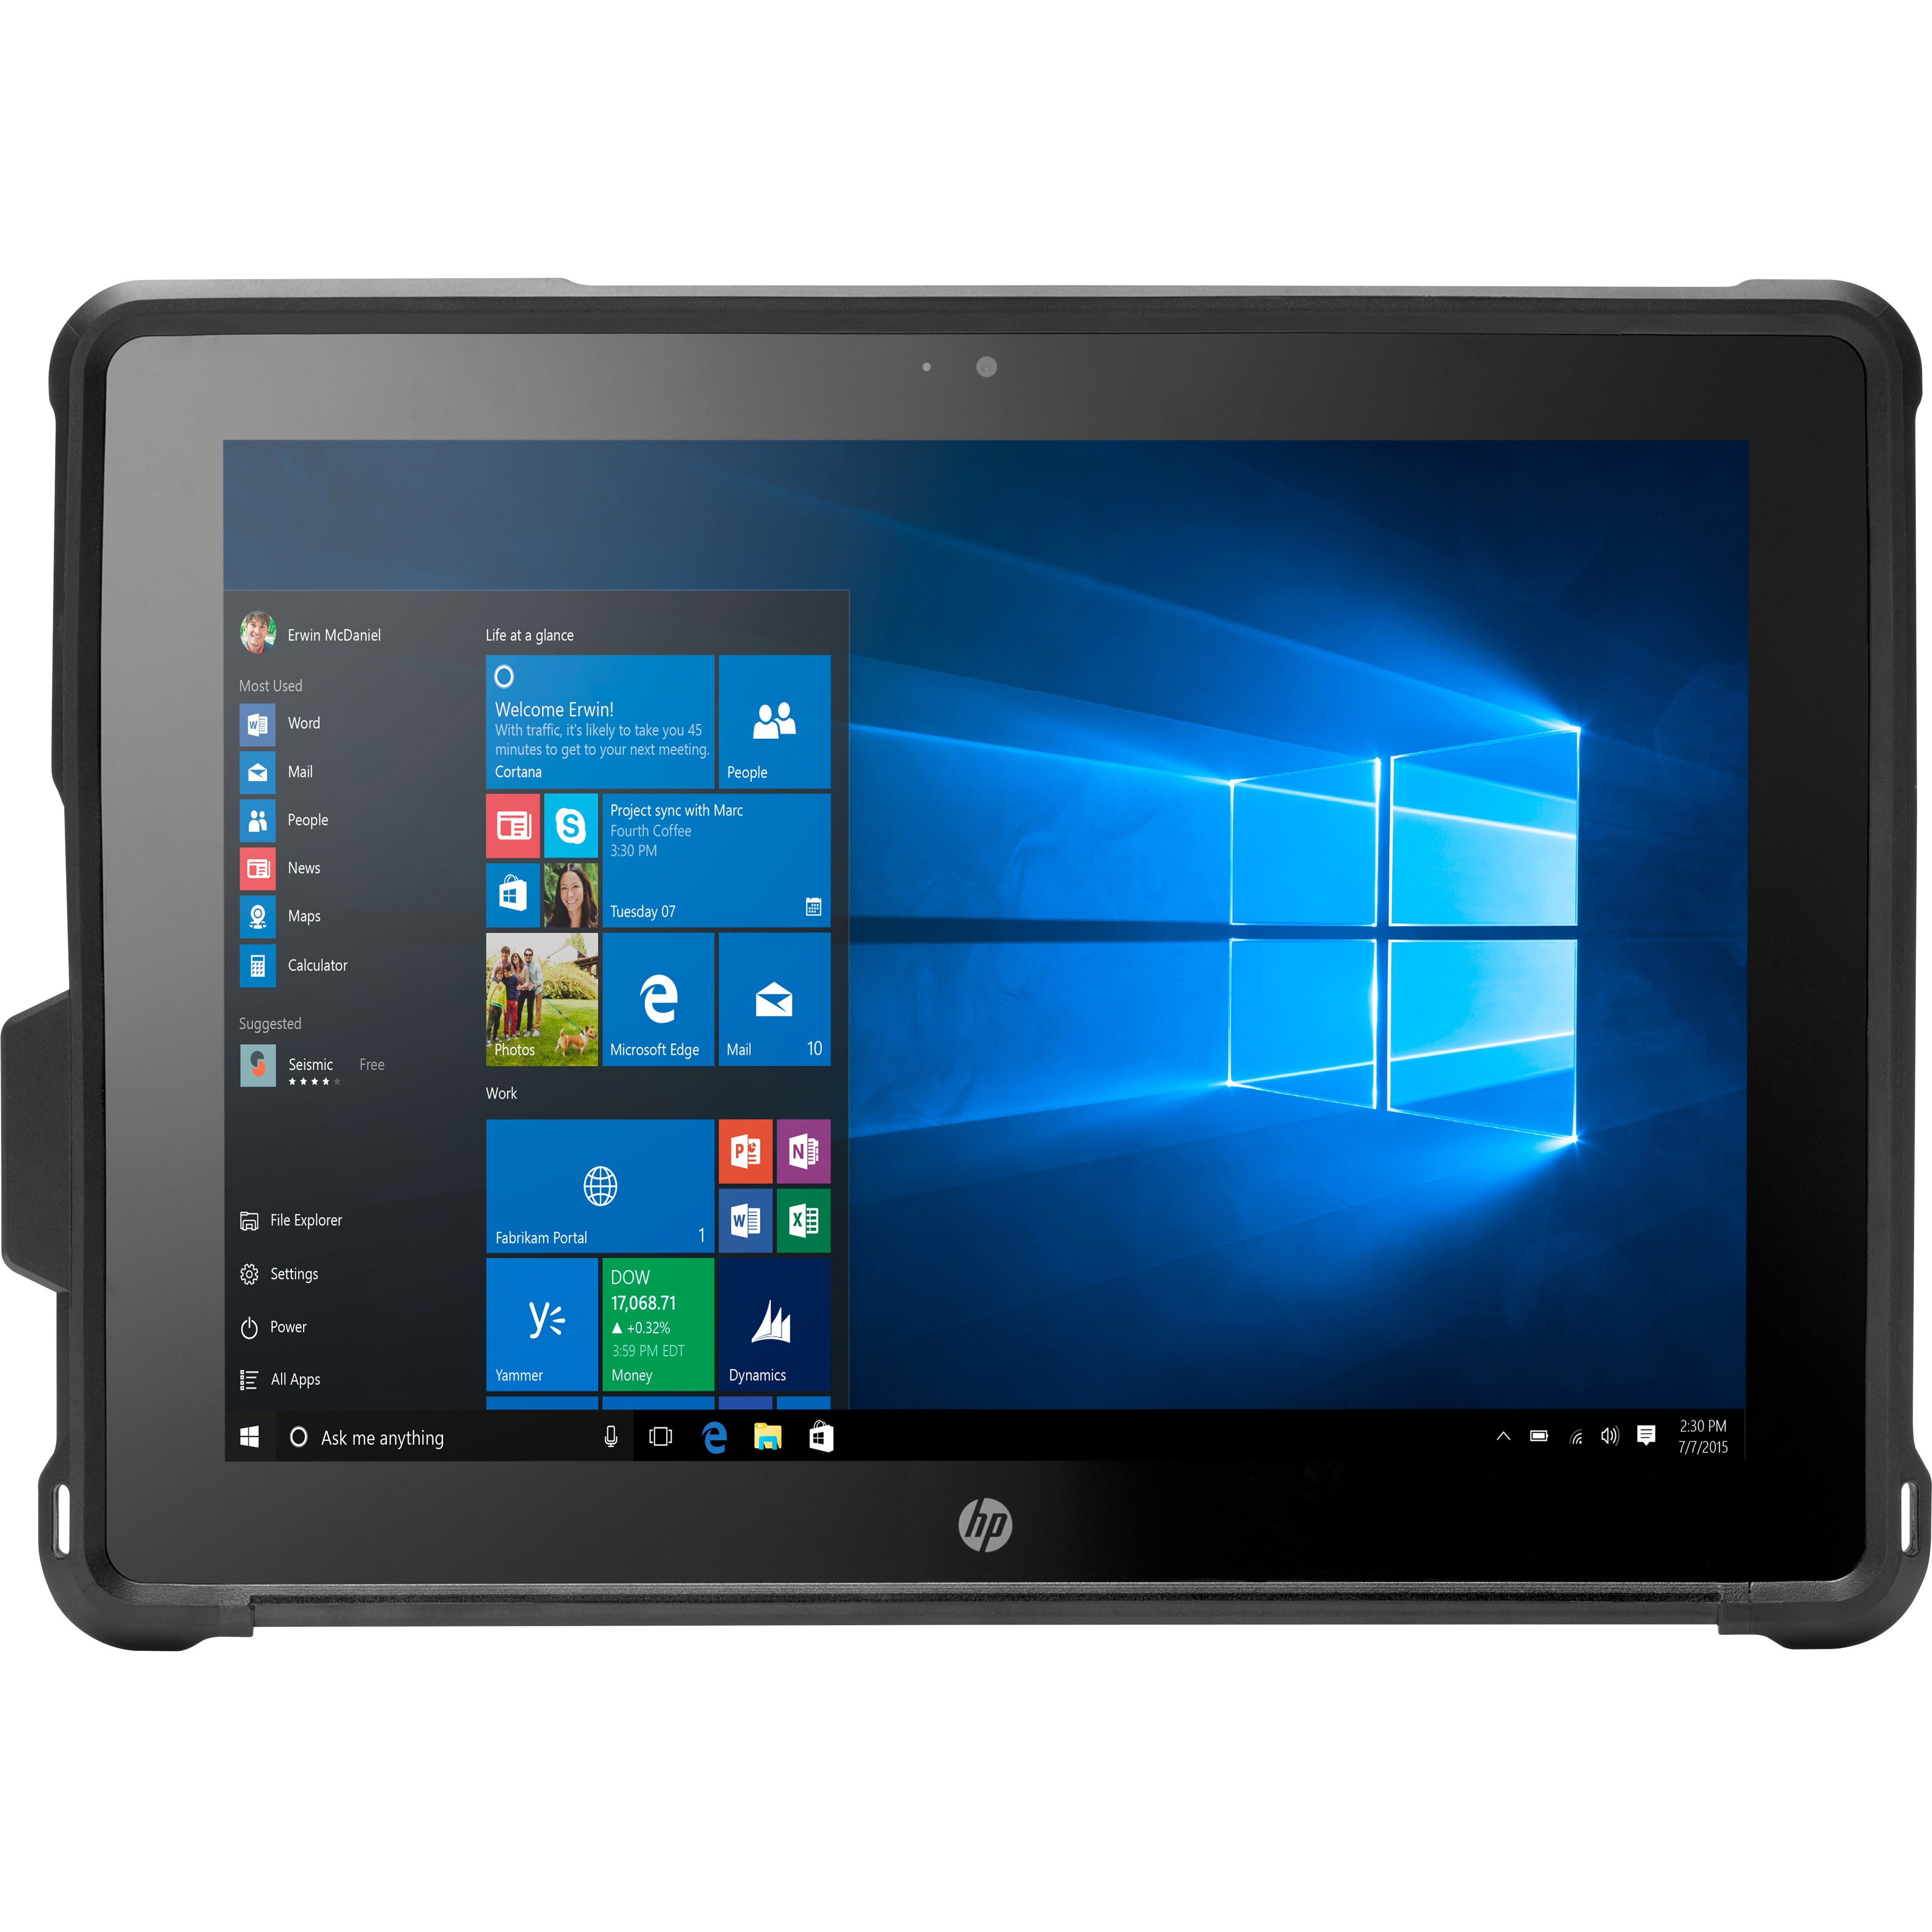 HP Pro x2 612 G2 Tablet - 12